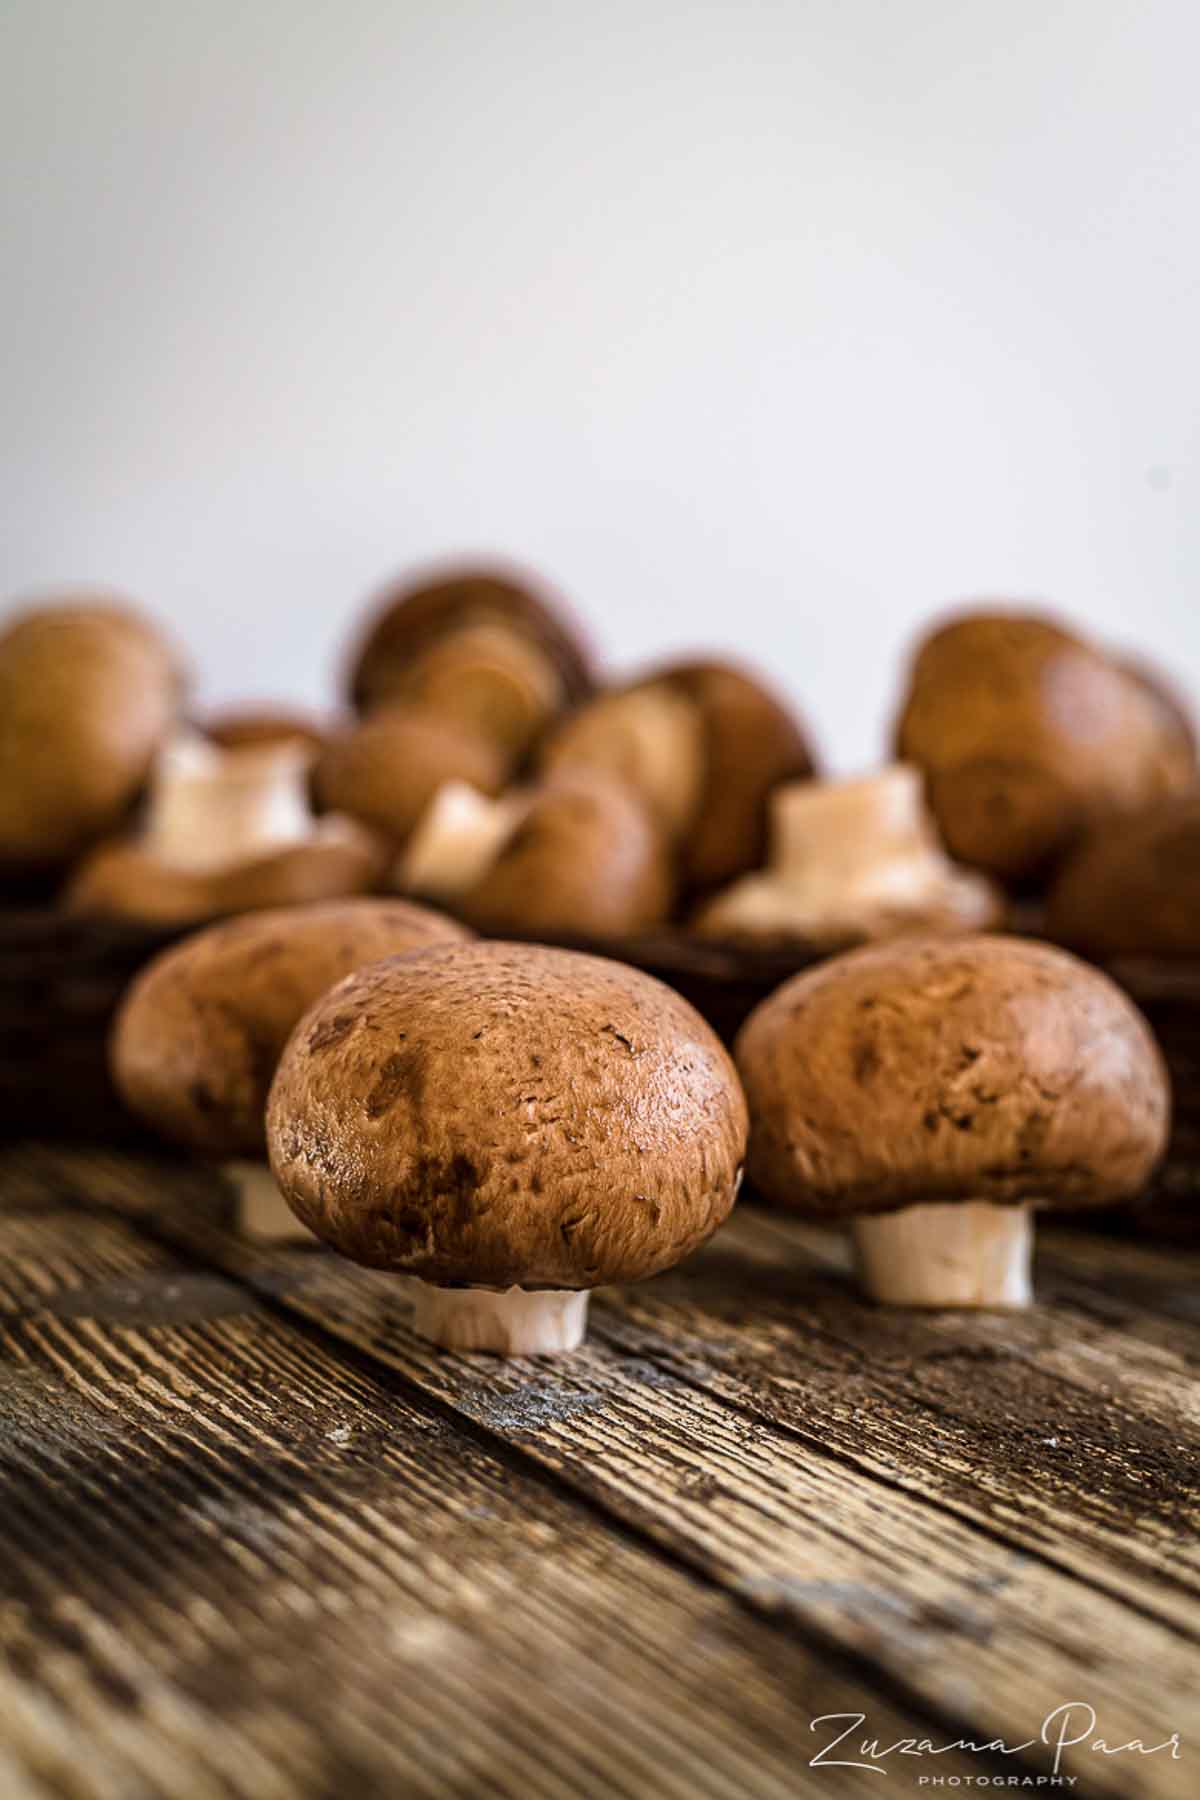 Fresh mushrooms on a wooden board.